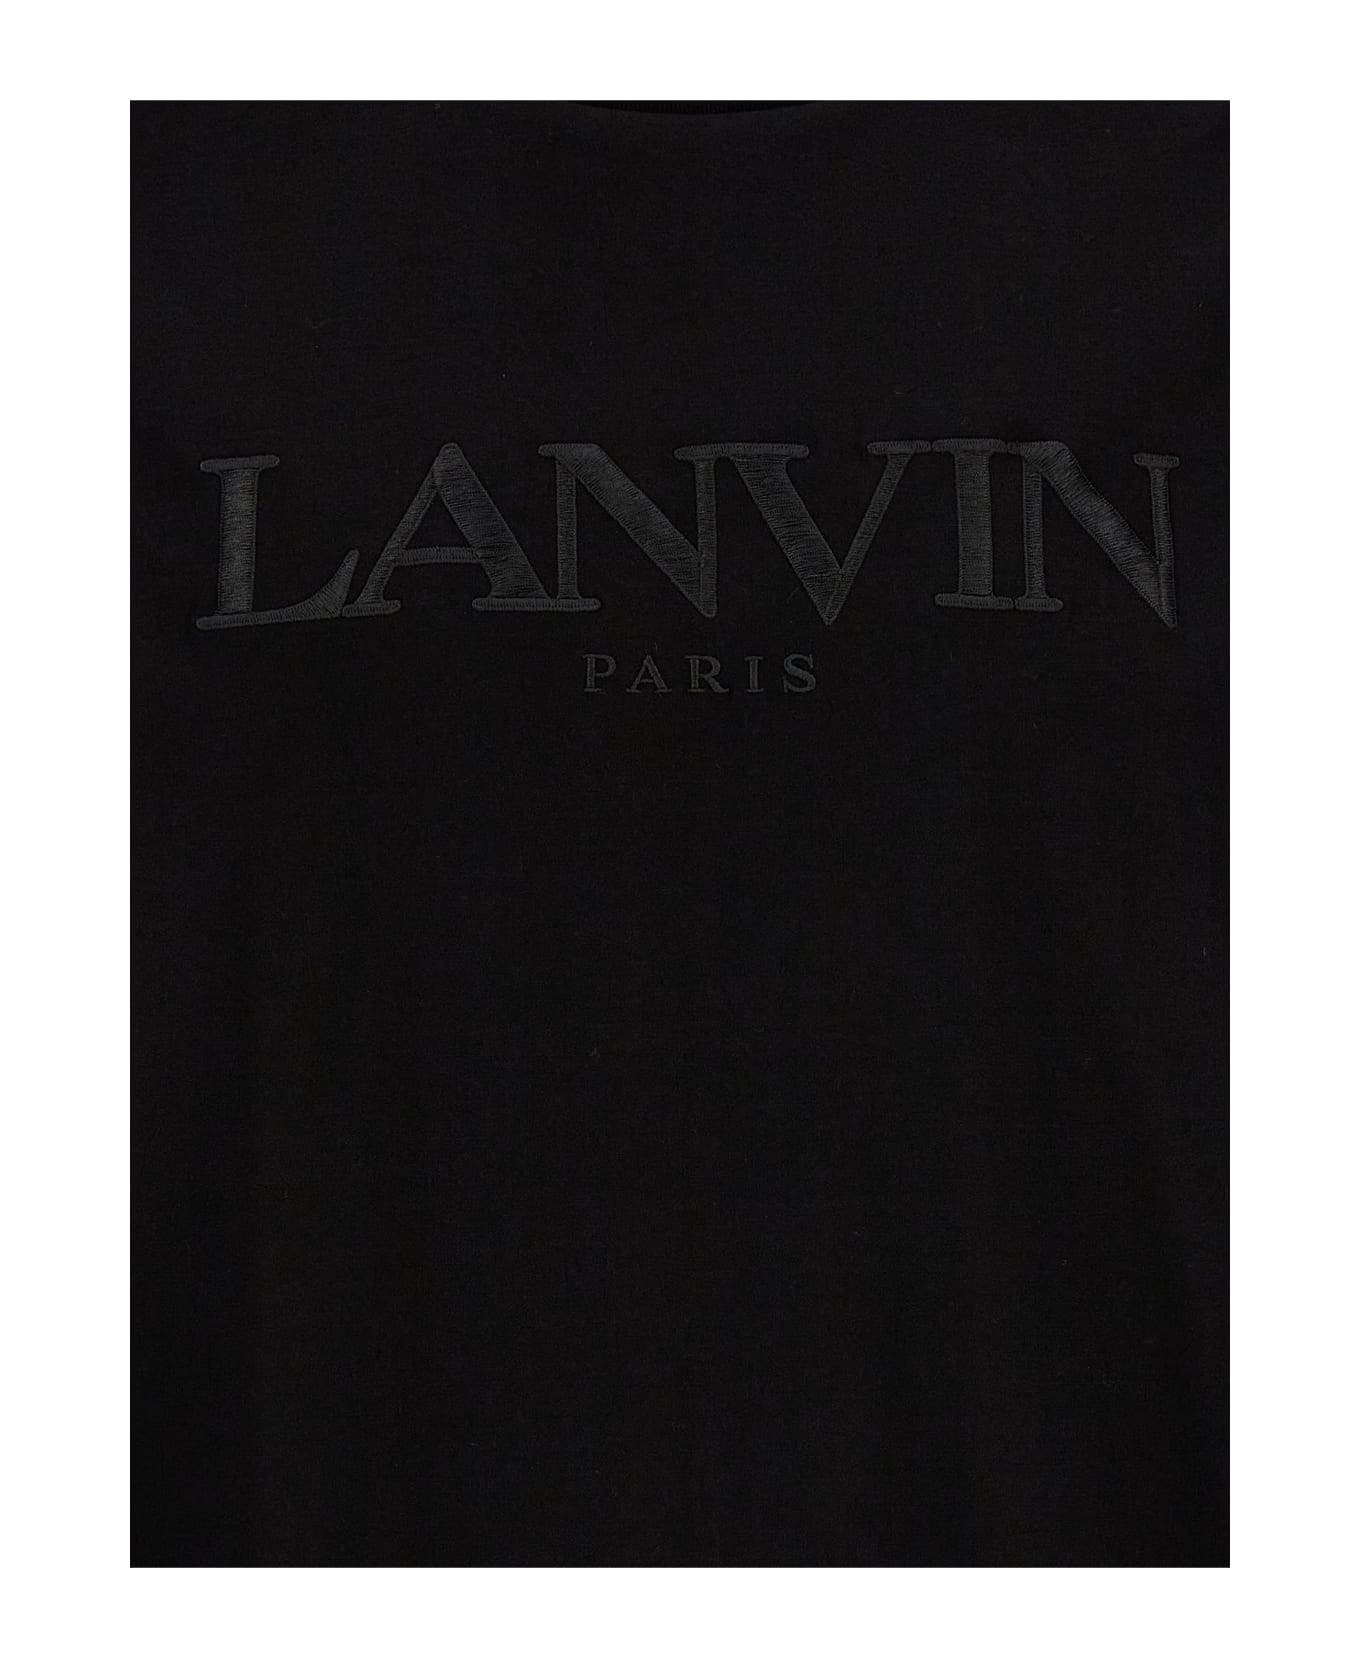 Lanvin Braided Band T-shirt - Black